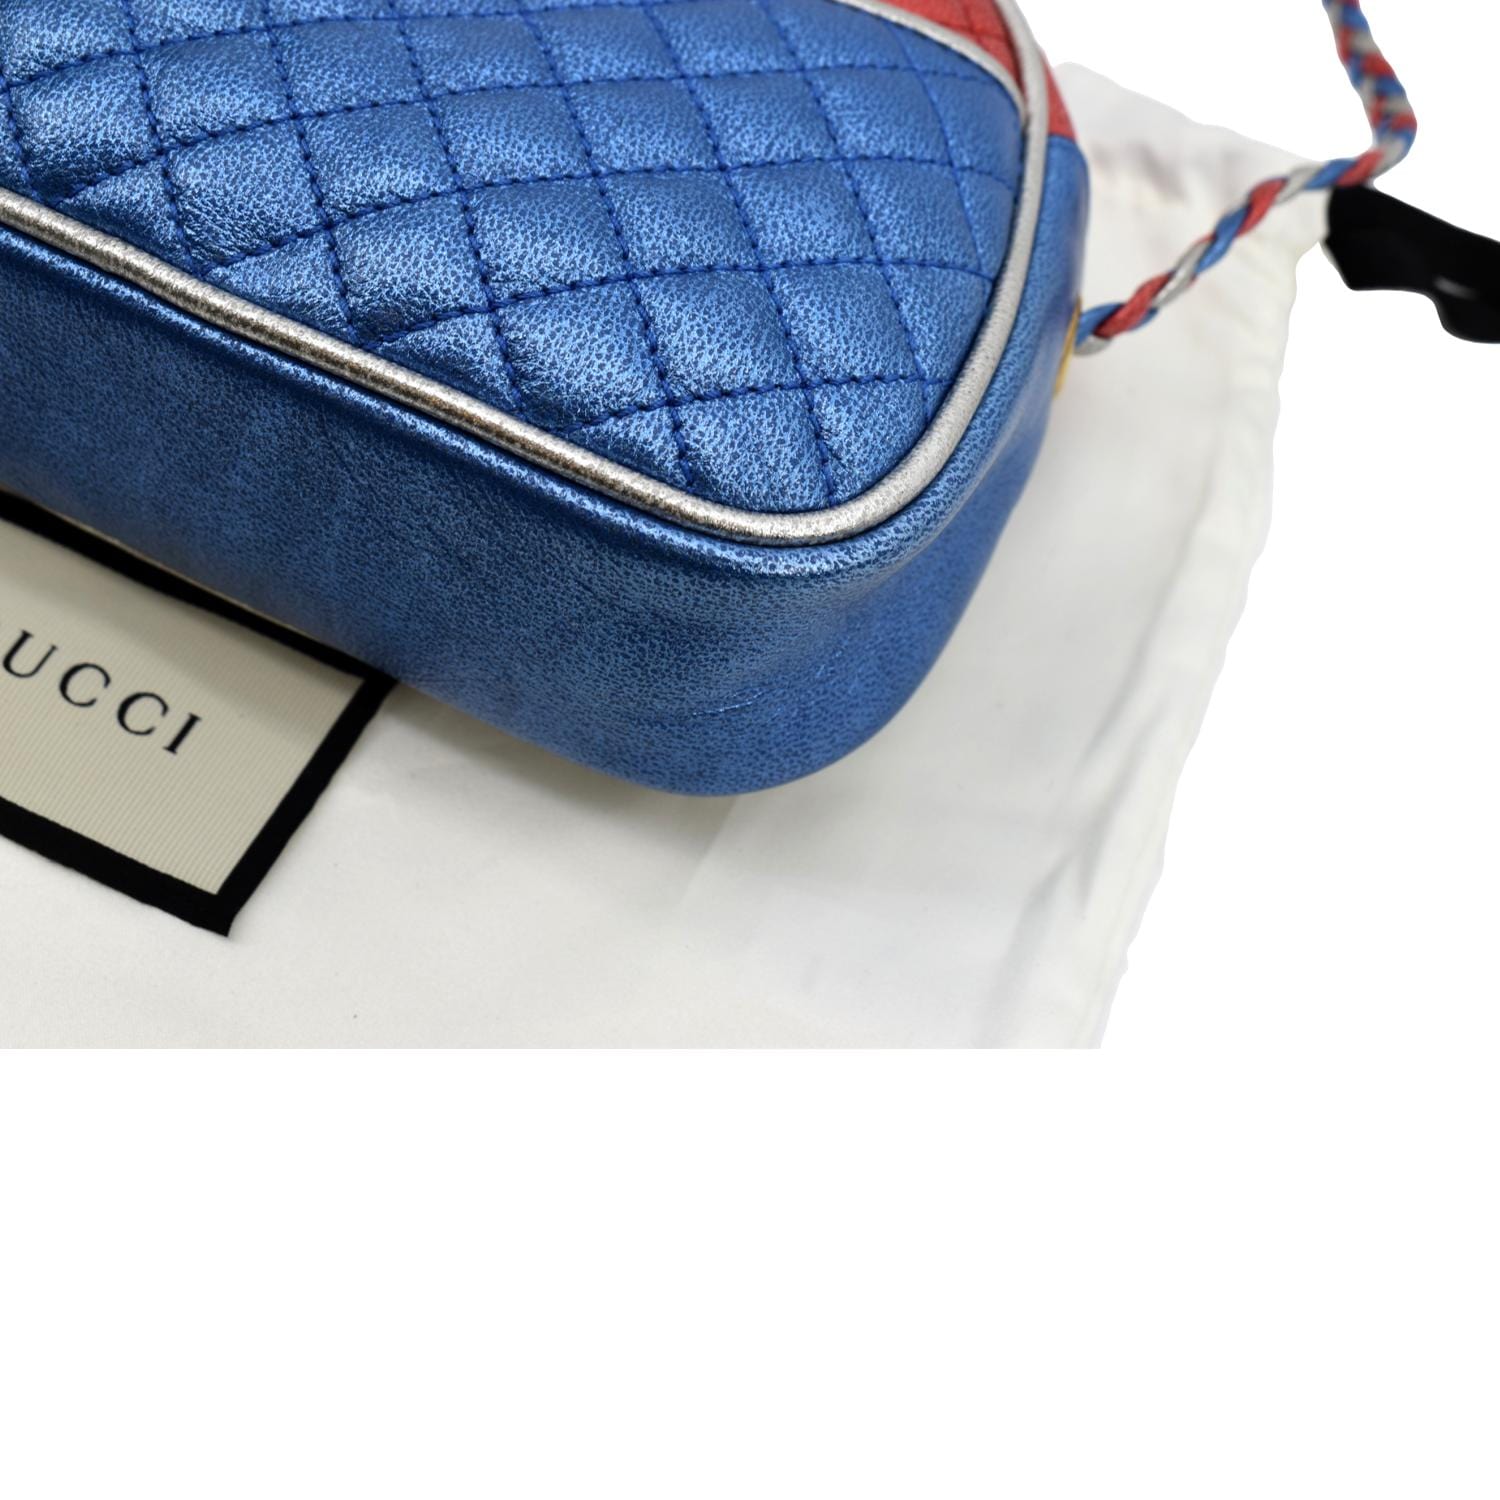 Gucci Trapuntata Mini Crossbody Bag